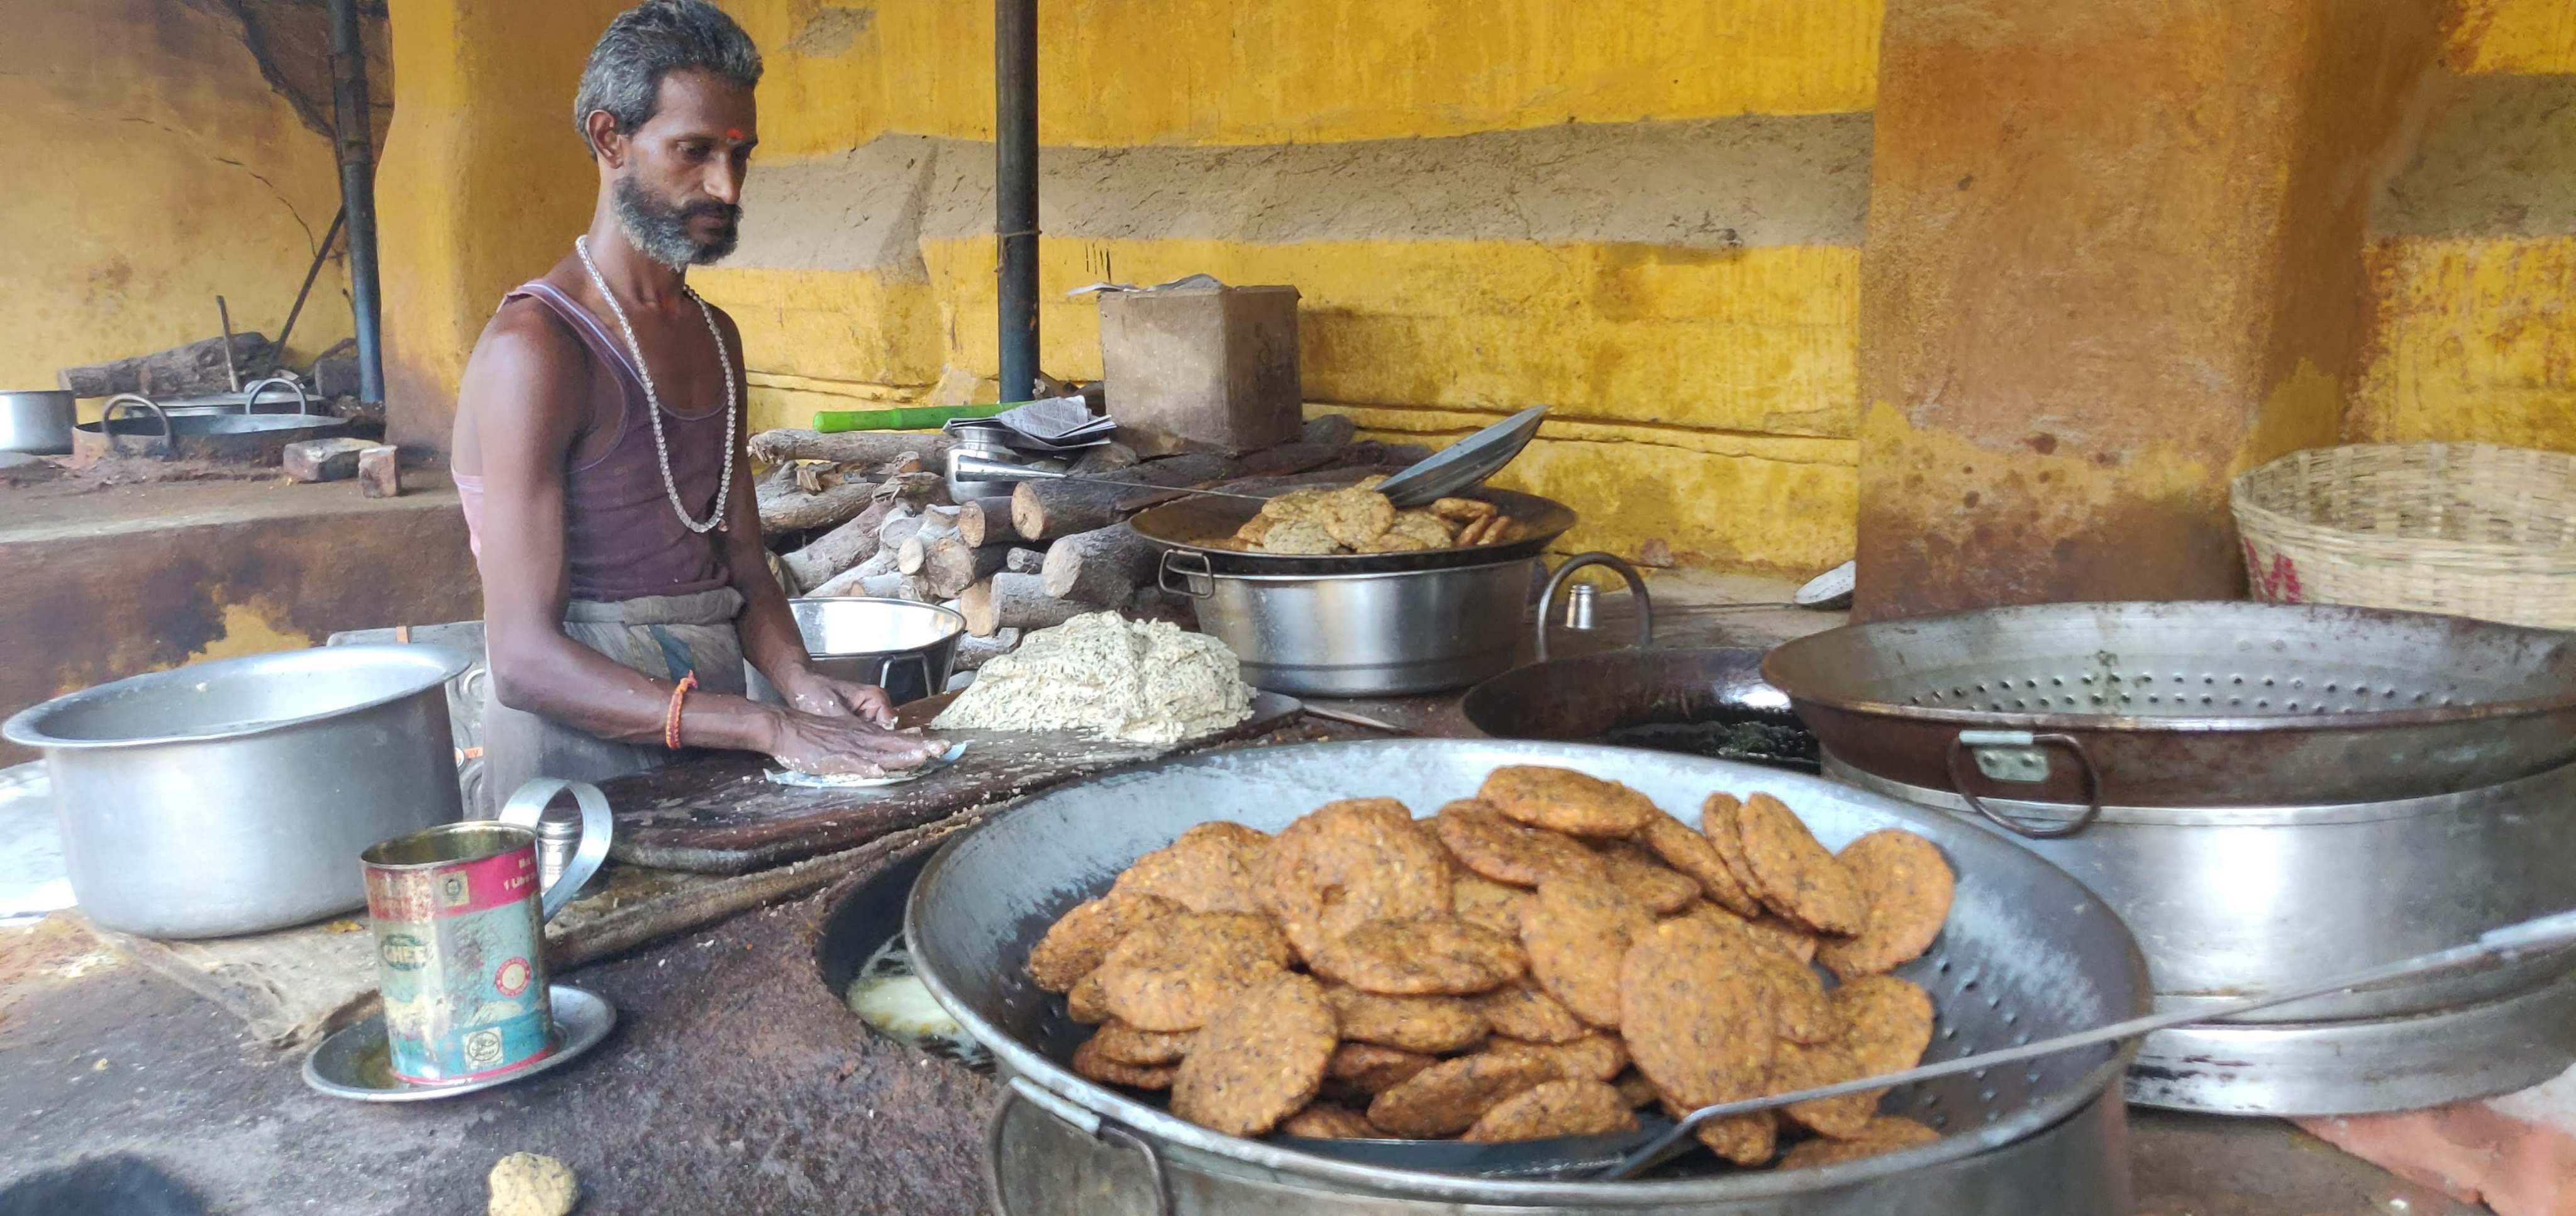 Vadas being made at a temple kitchen in Srirangam, Tamil Nadu. Photo: Rakesh Raghunathan